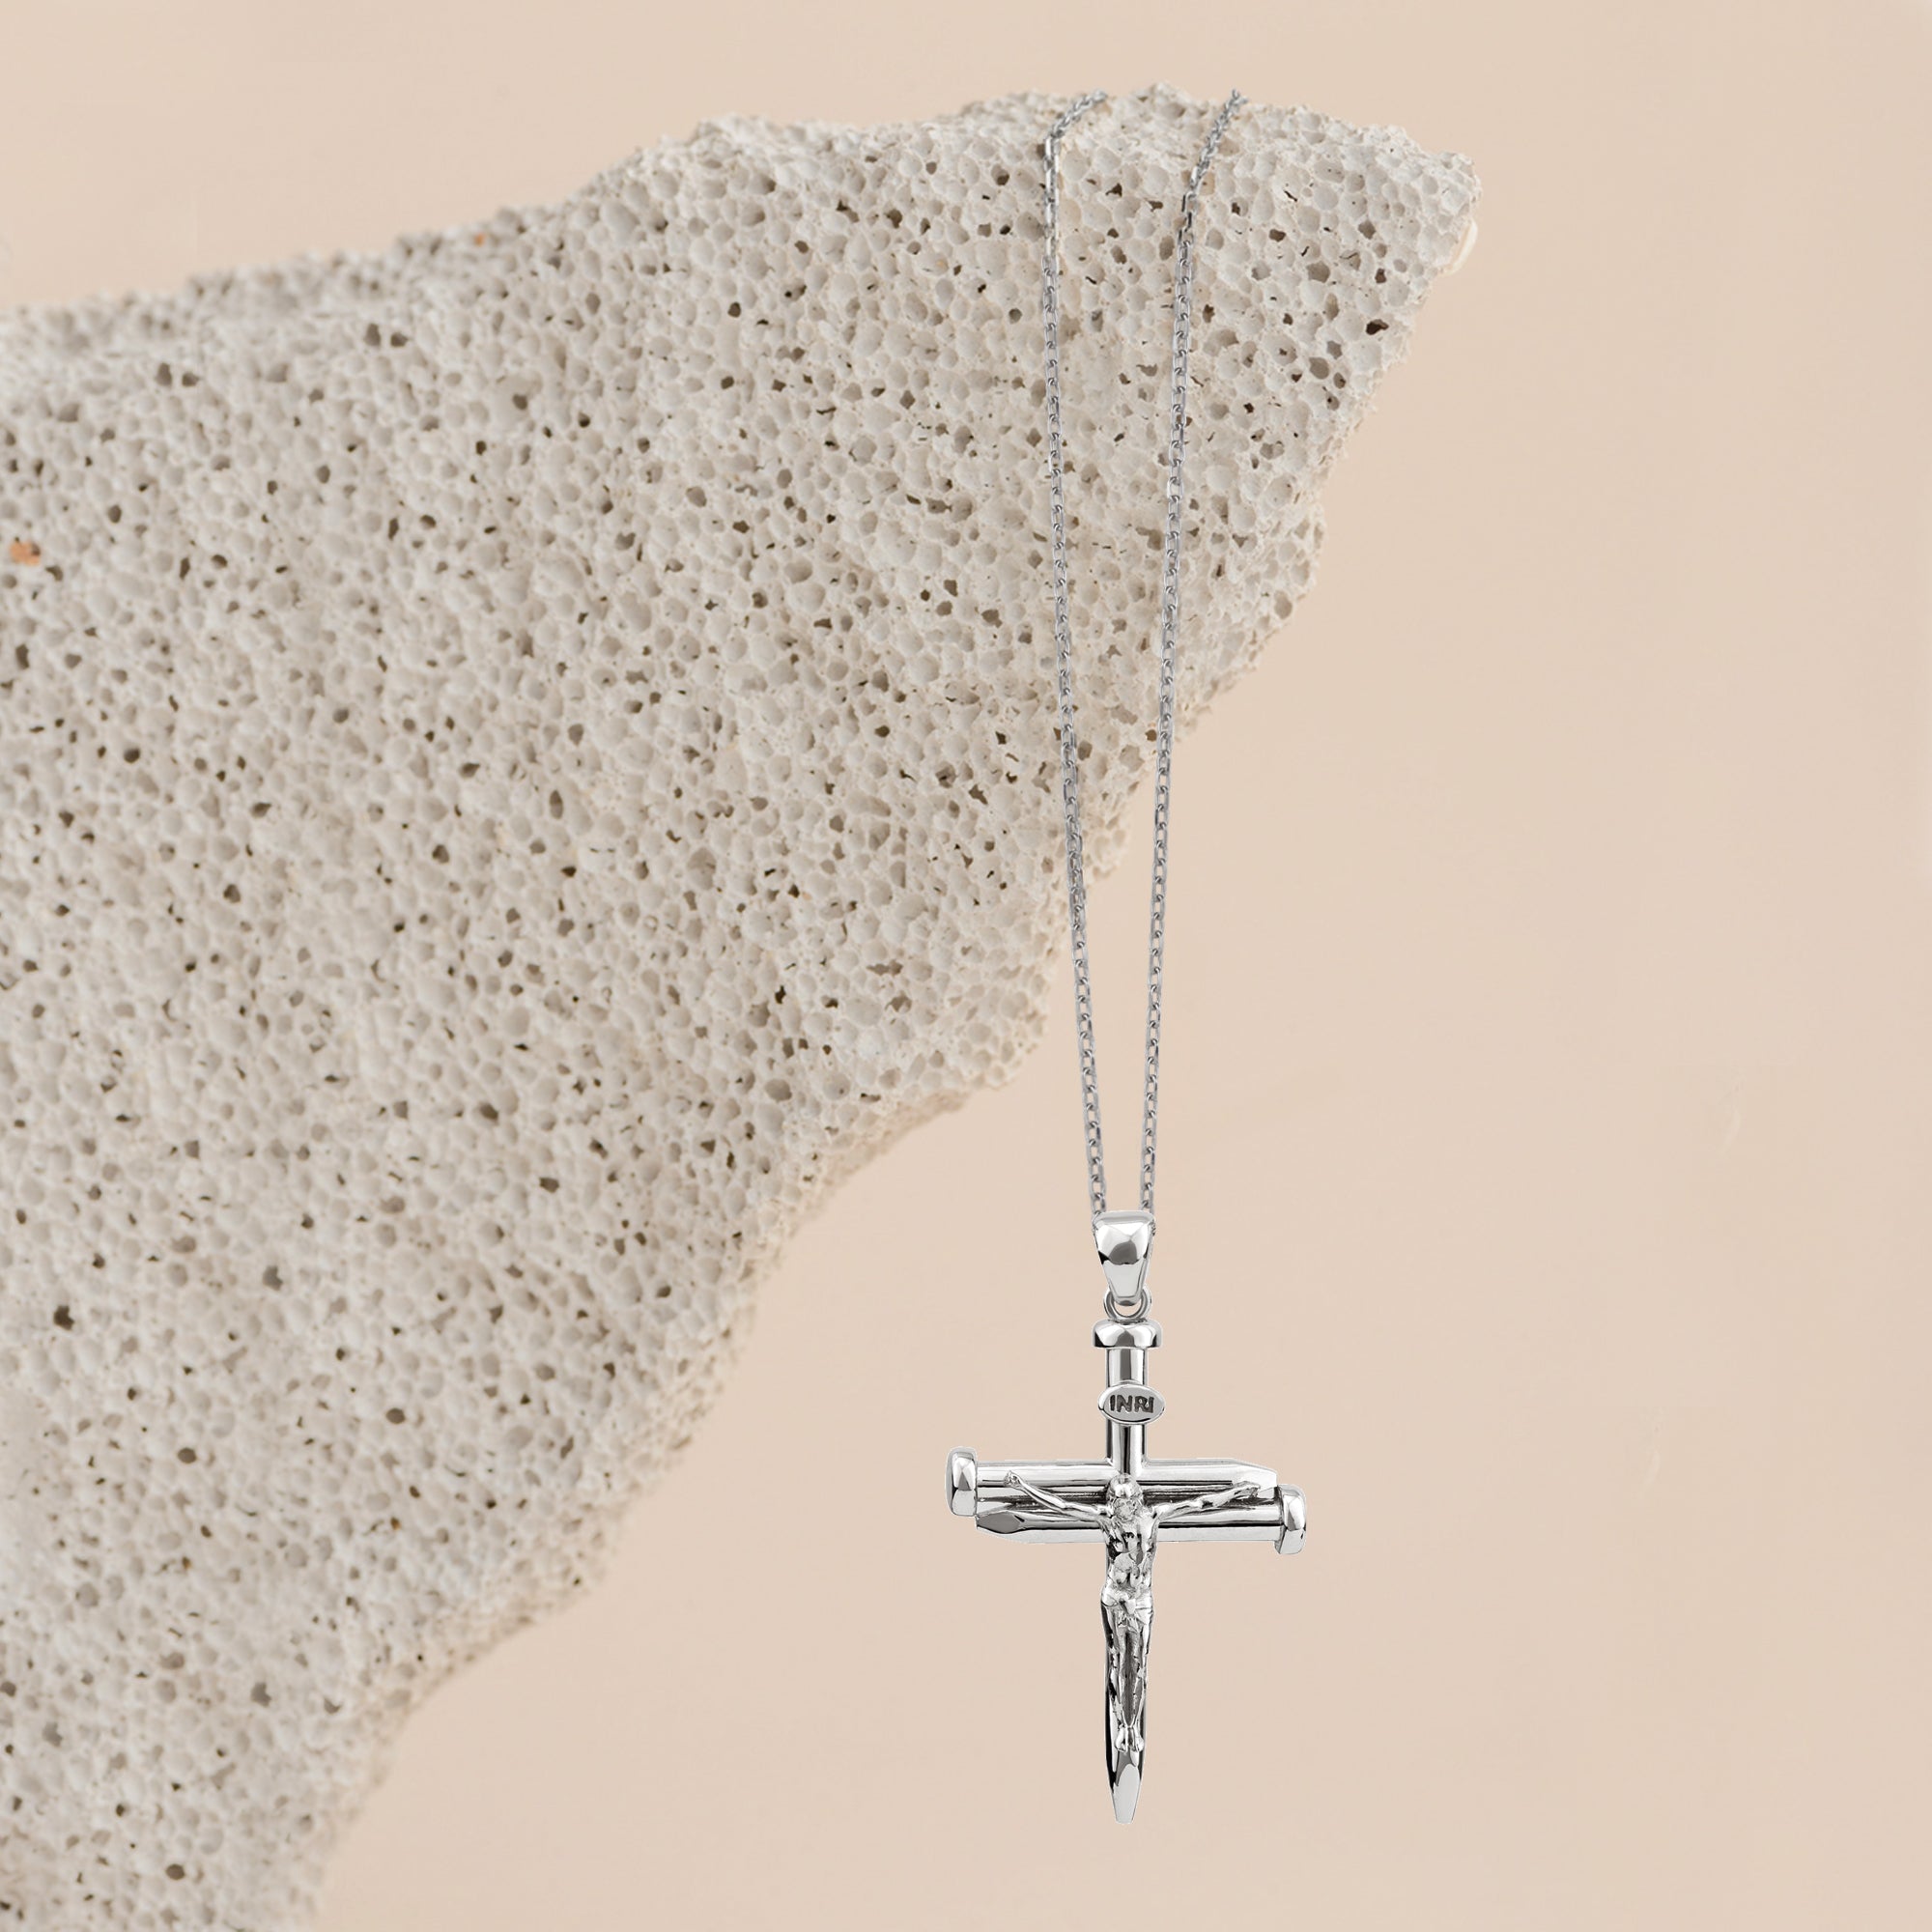 Three Nail Crucifix Sterling Silver Pendant